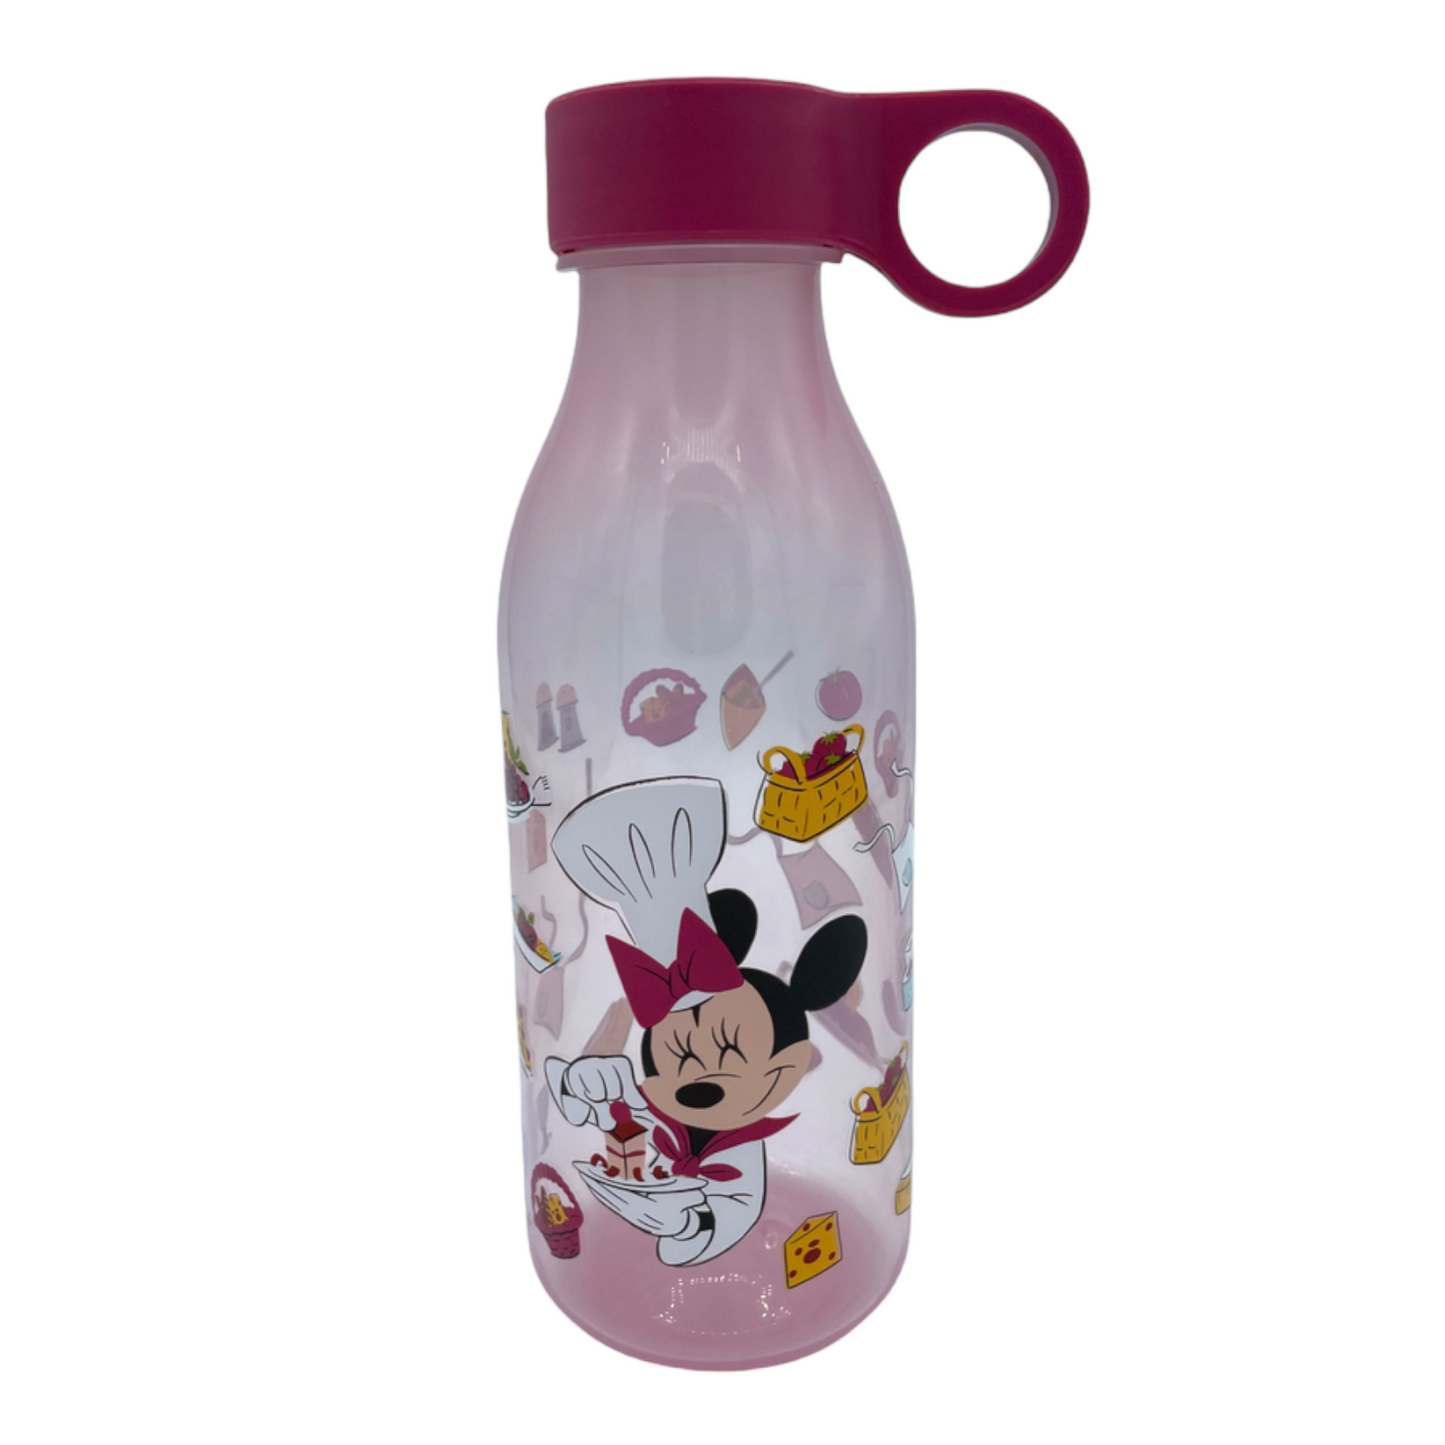 Minnie Mouse - Epcot International Food & Wine Festival Mini Bottle